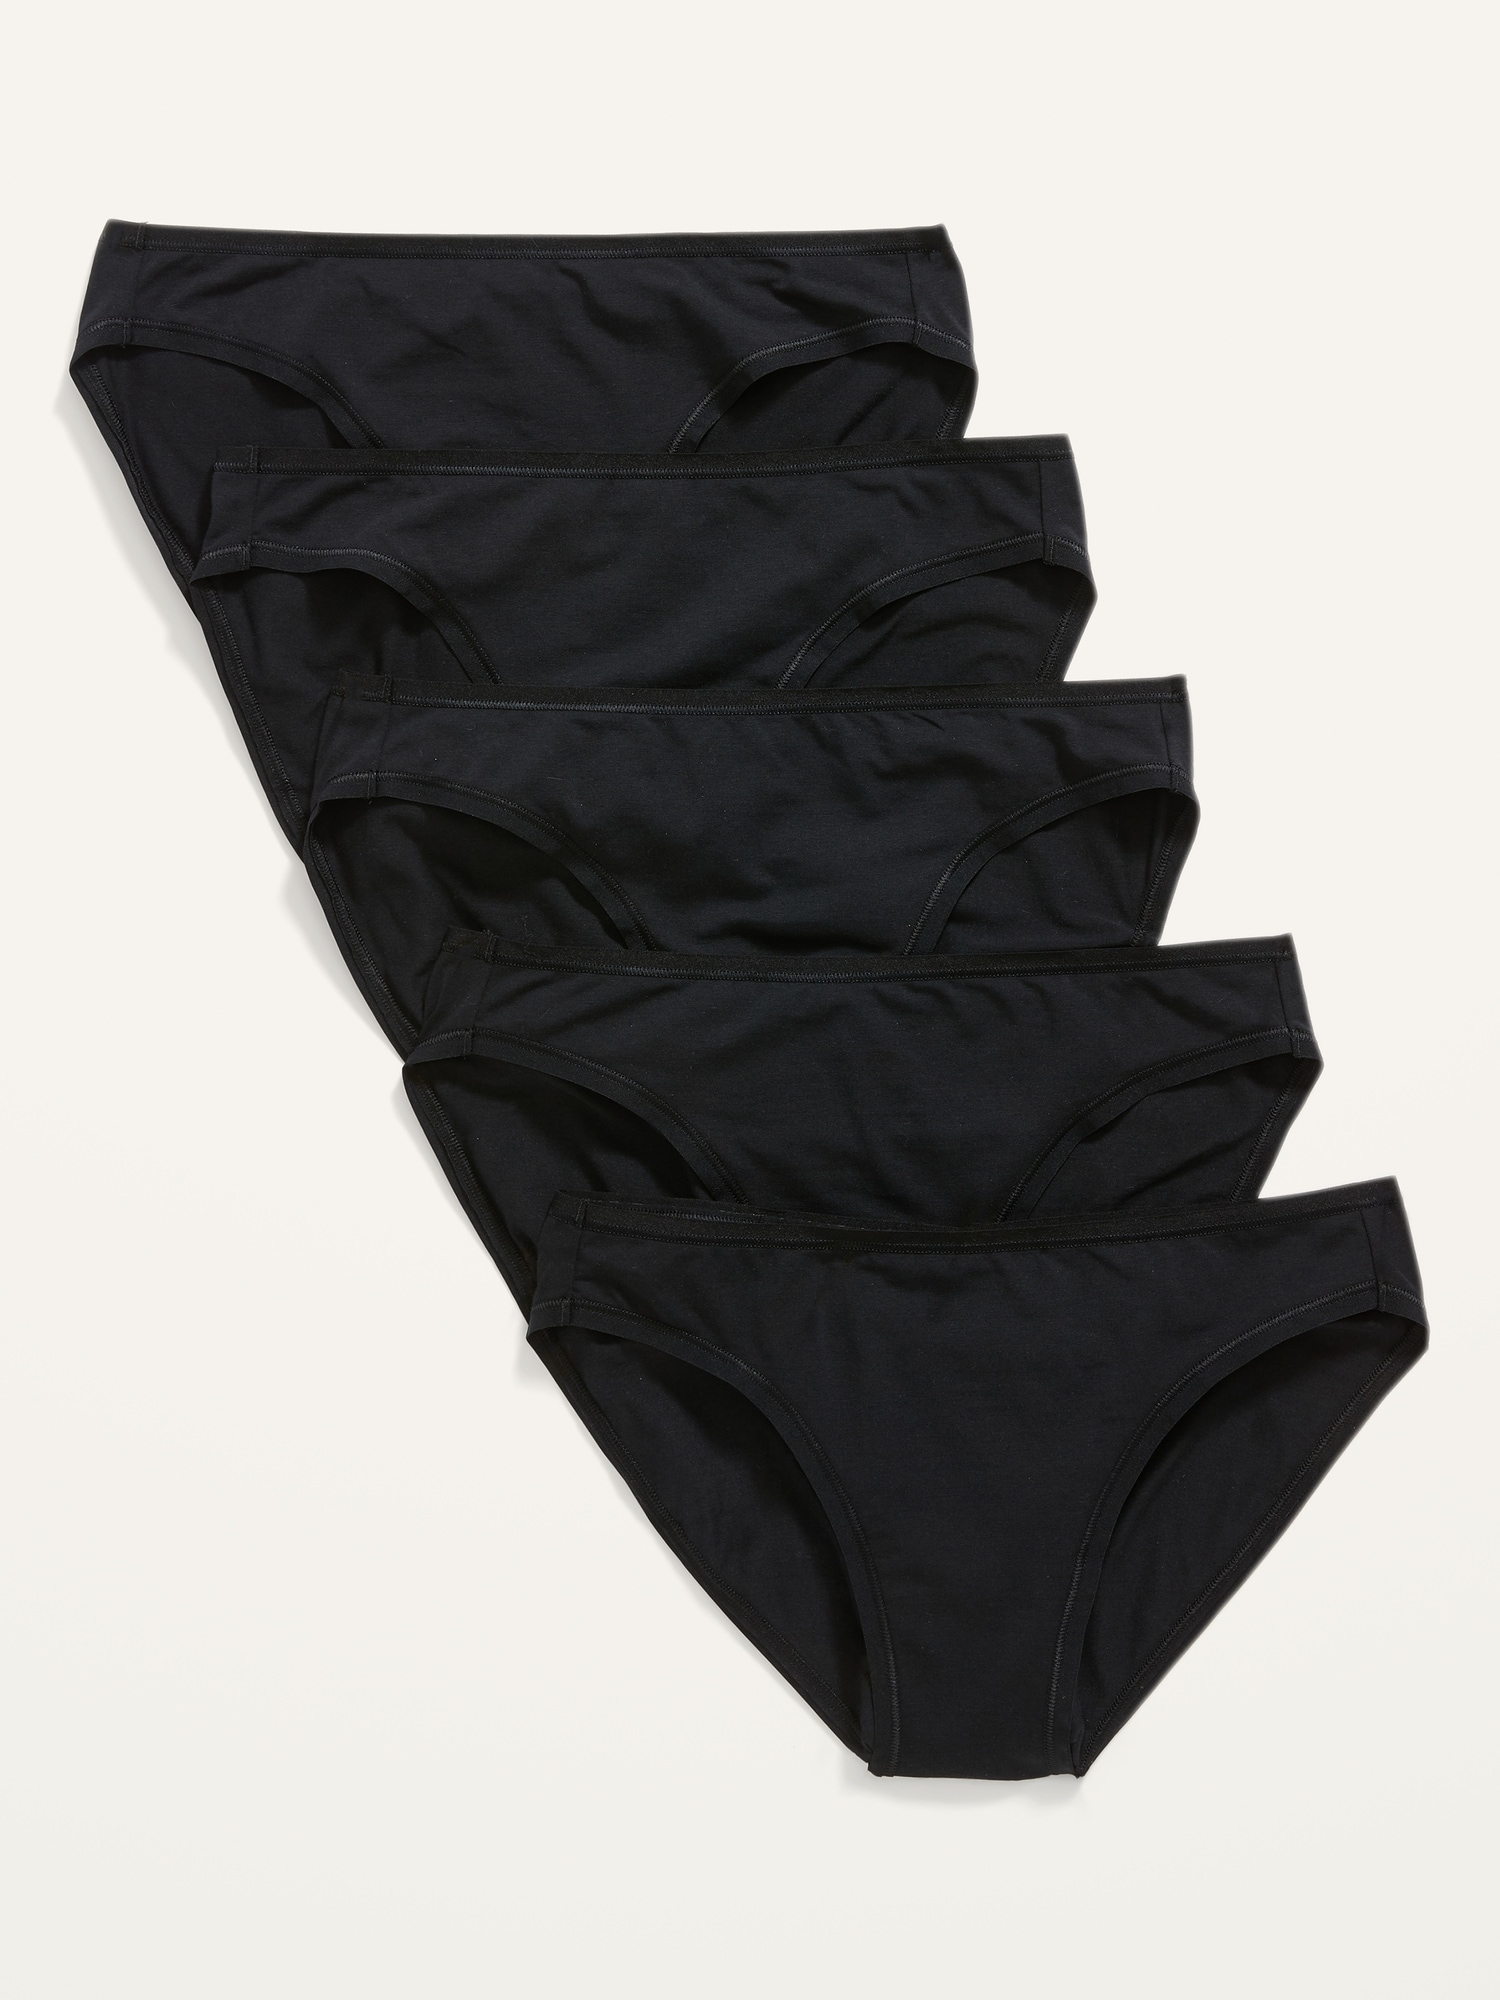 MorningSave: 8-Pack: Emprella Women's Cotton Blend Bikini Underwear